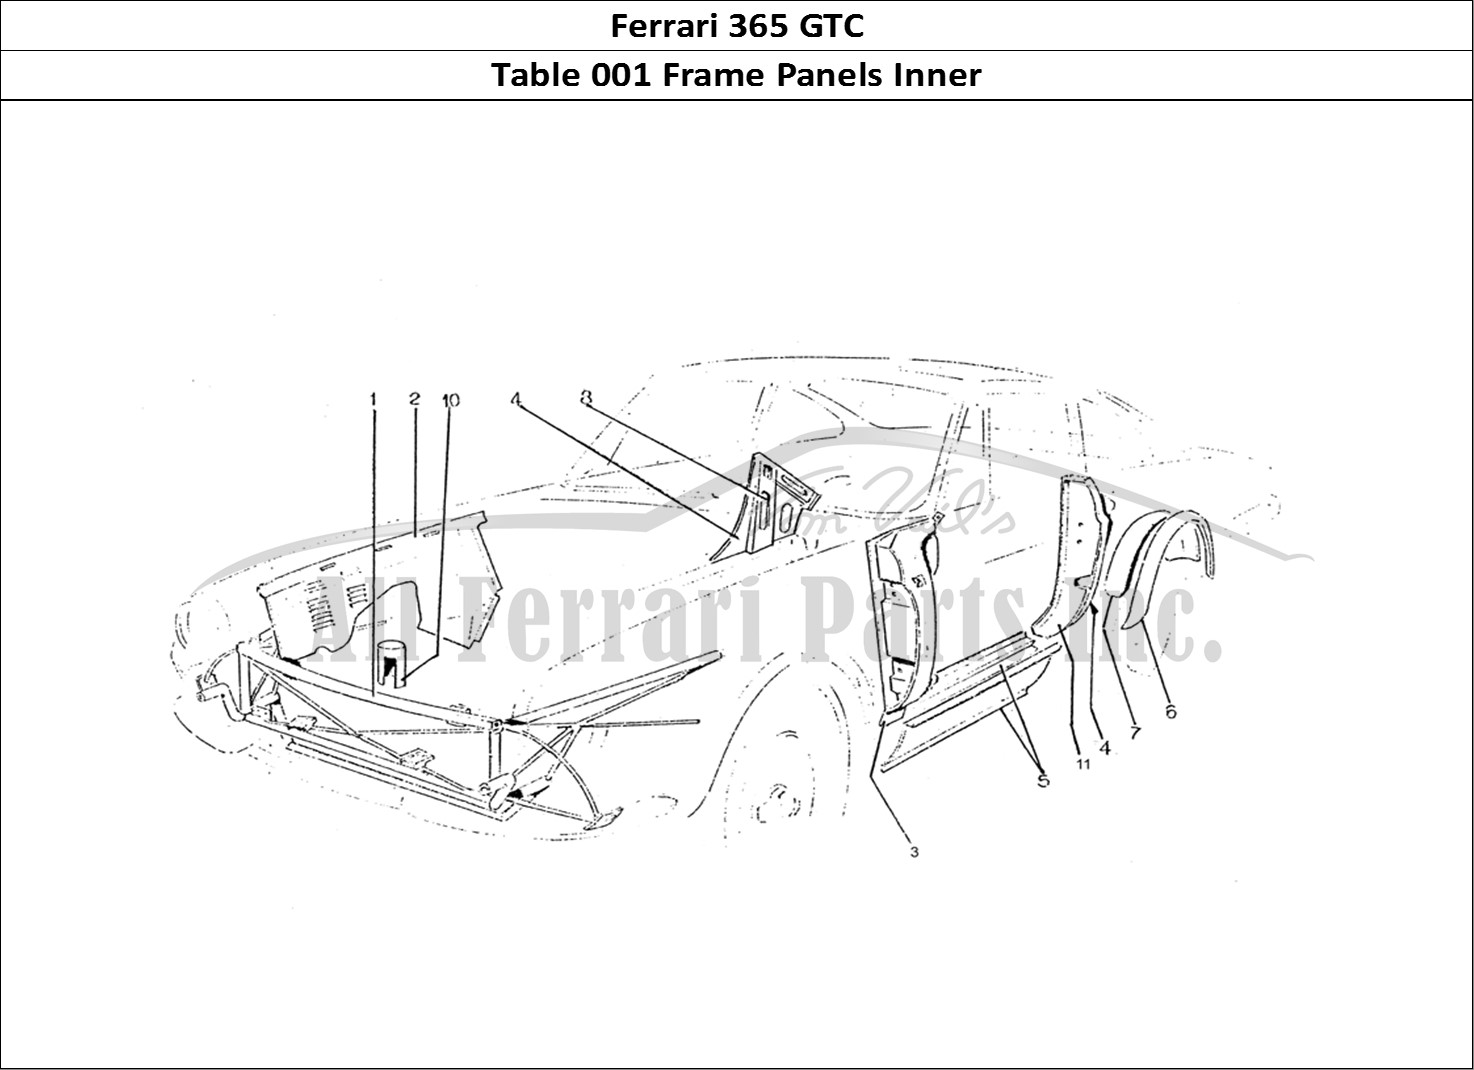 Ferrari Parts Ferrari 330 GTC (Coachwork) Page 001 Inner Frame panels